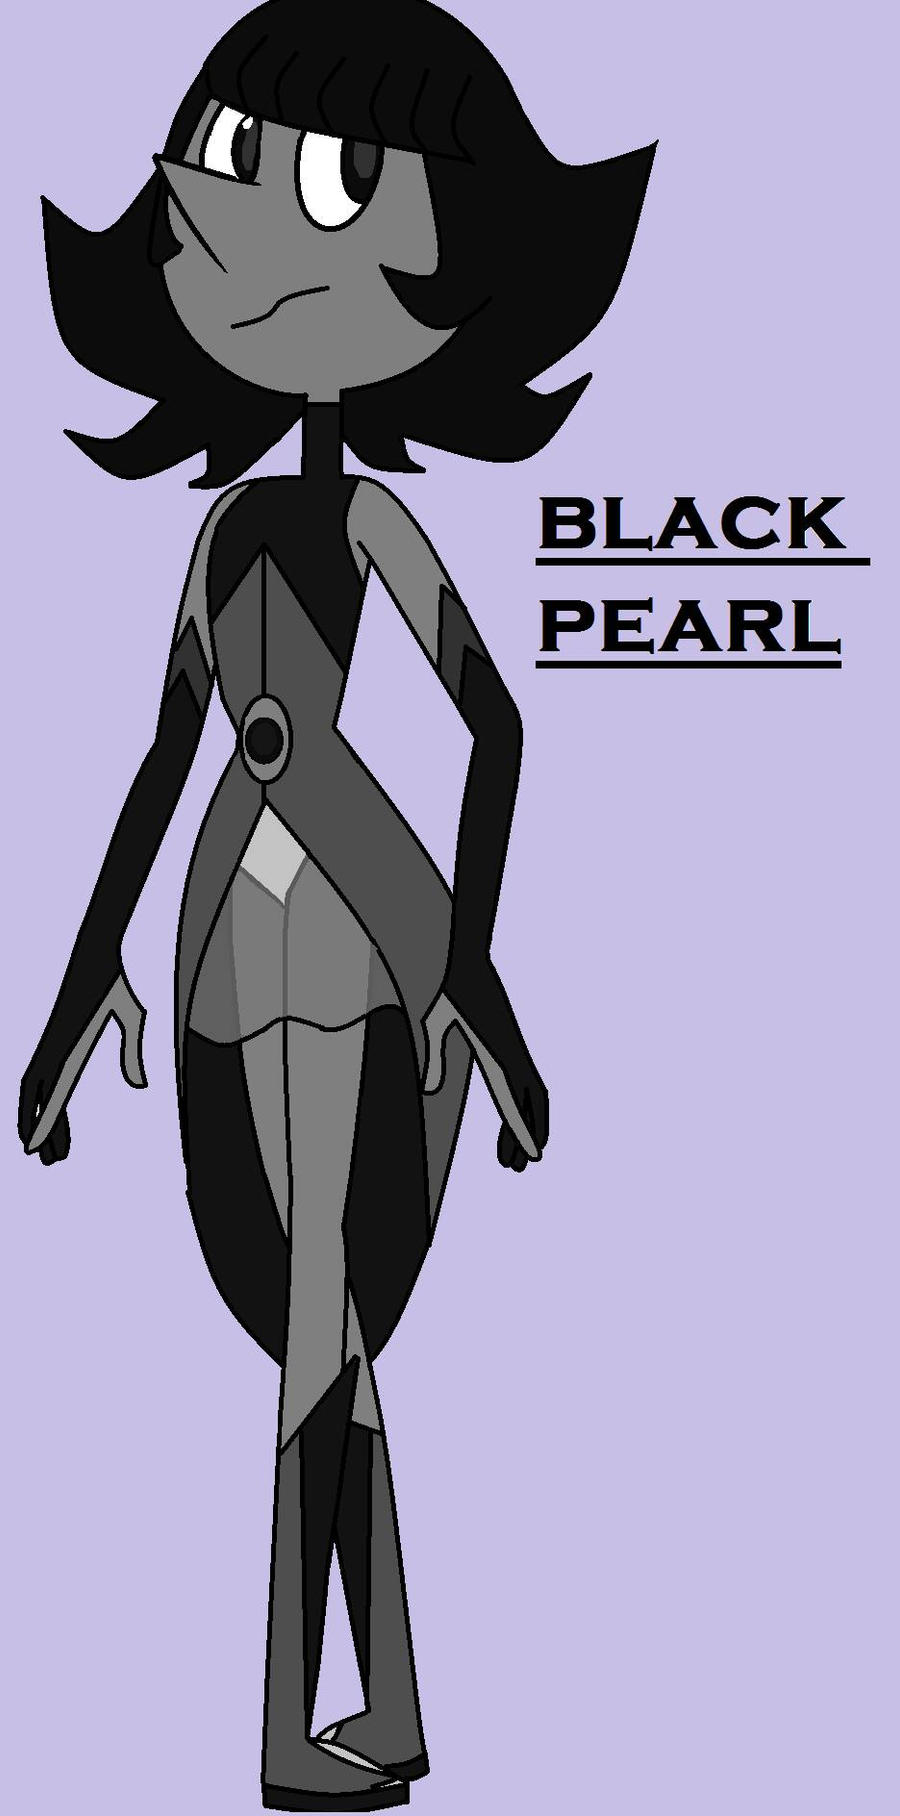 Steven universe black pearl